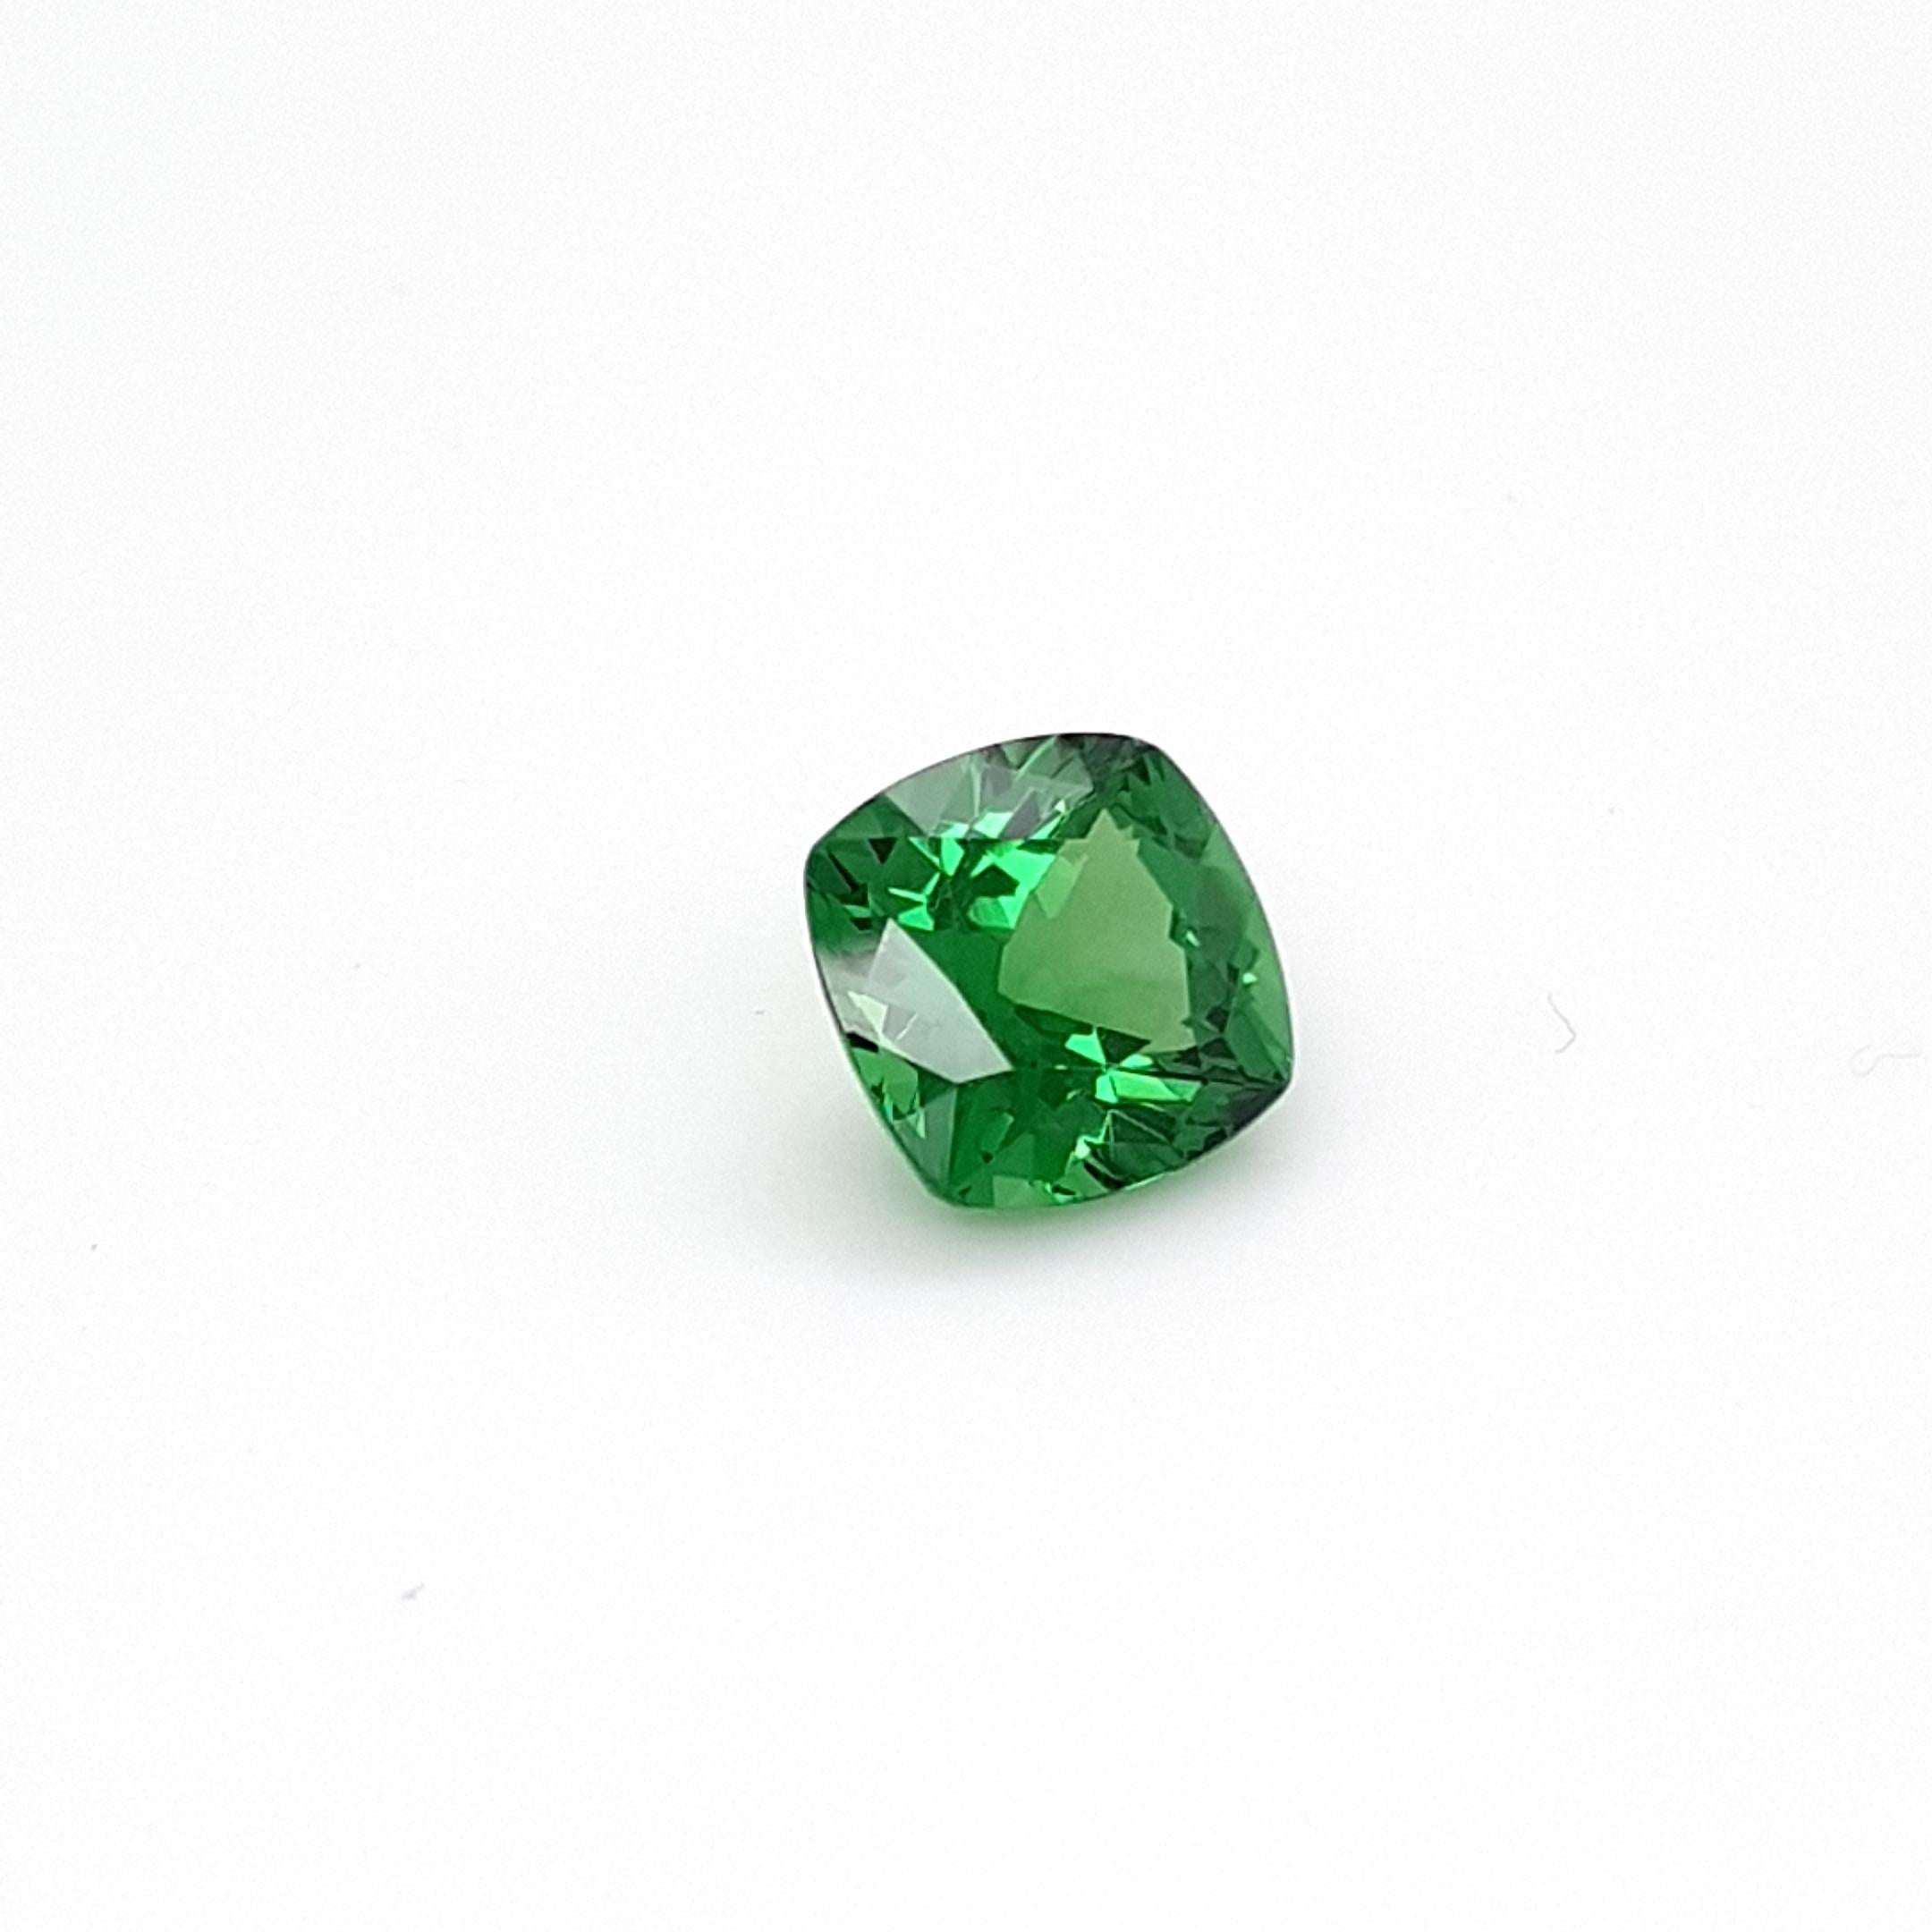 Contemporary Intense Green Tsavorite Garnet, Faceted Gem, 4, 61 ct., loose Gemstone For Sale